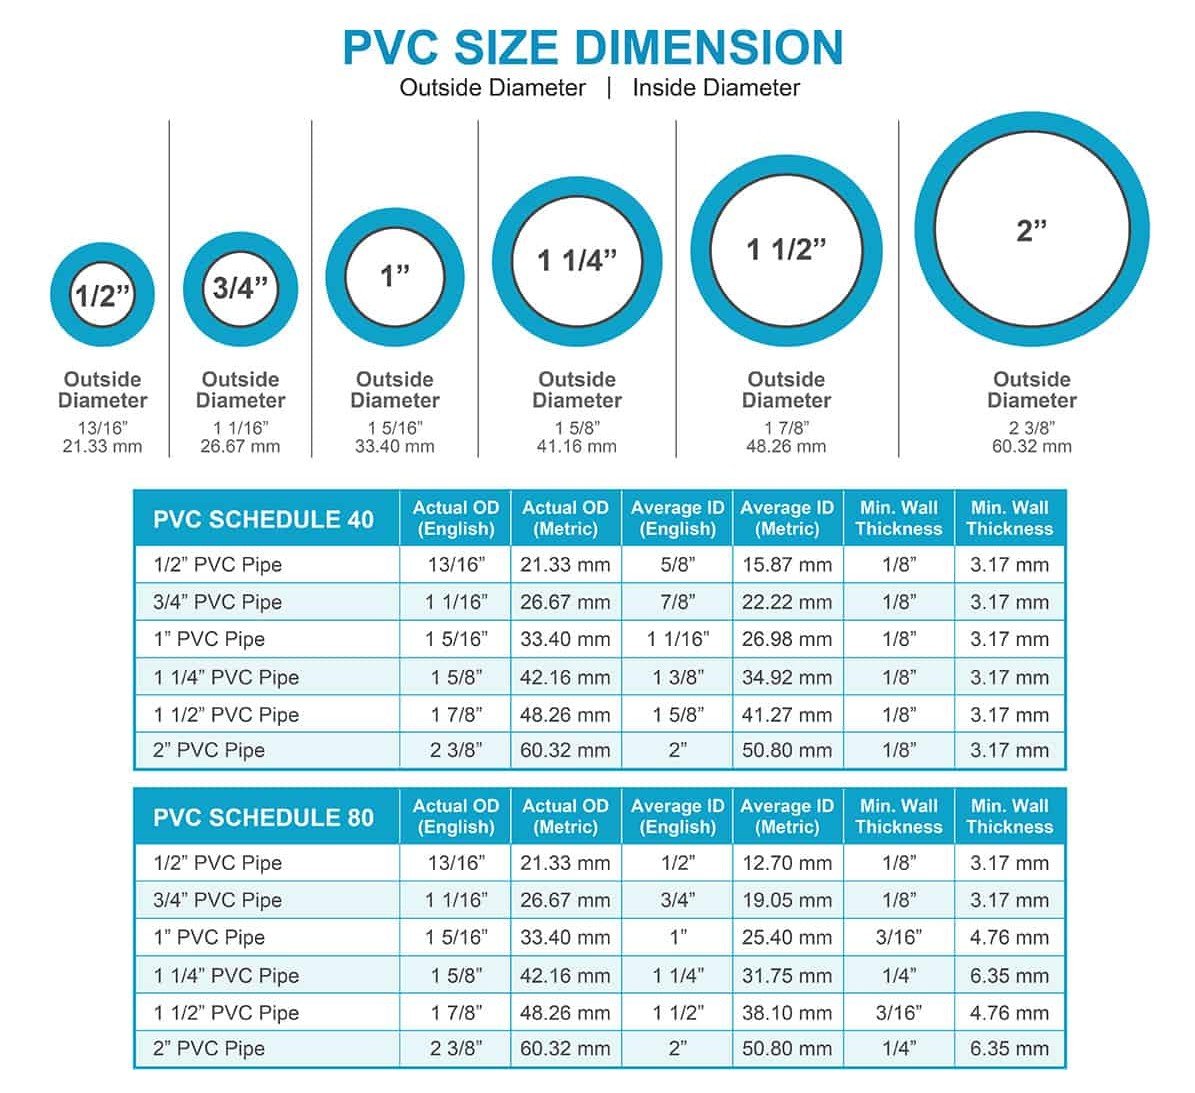 PVC Size Dimensions